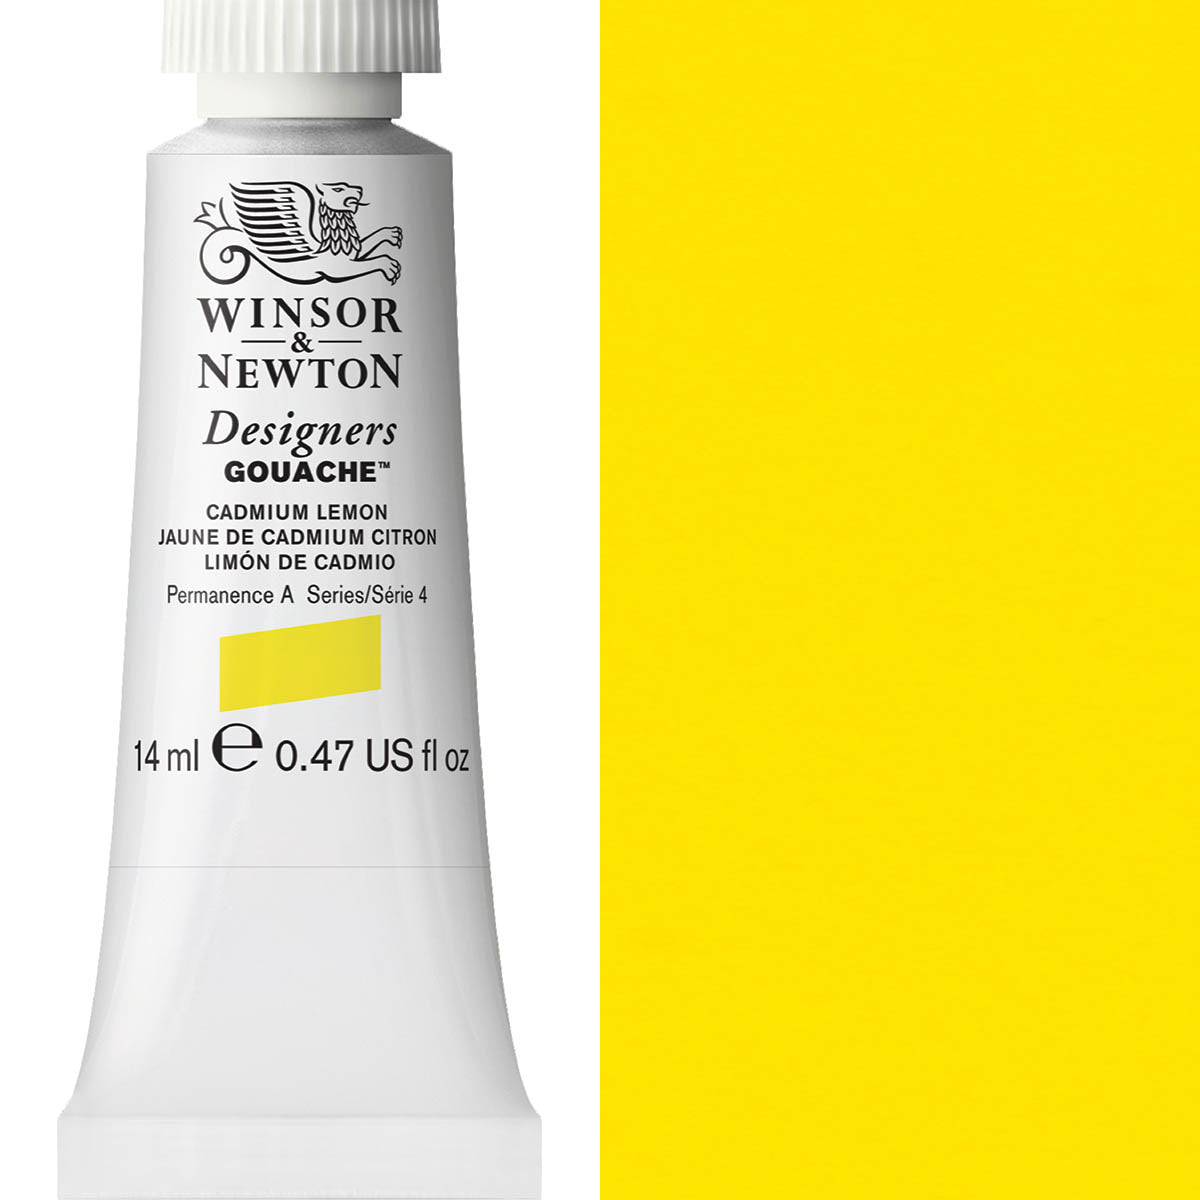 Winsor and Newton - Designers Gouache - 14ml - Cadmium Lemon